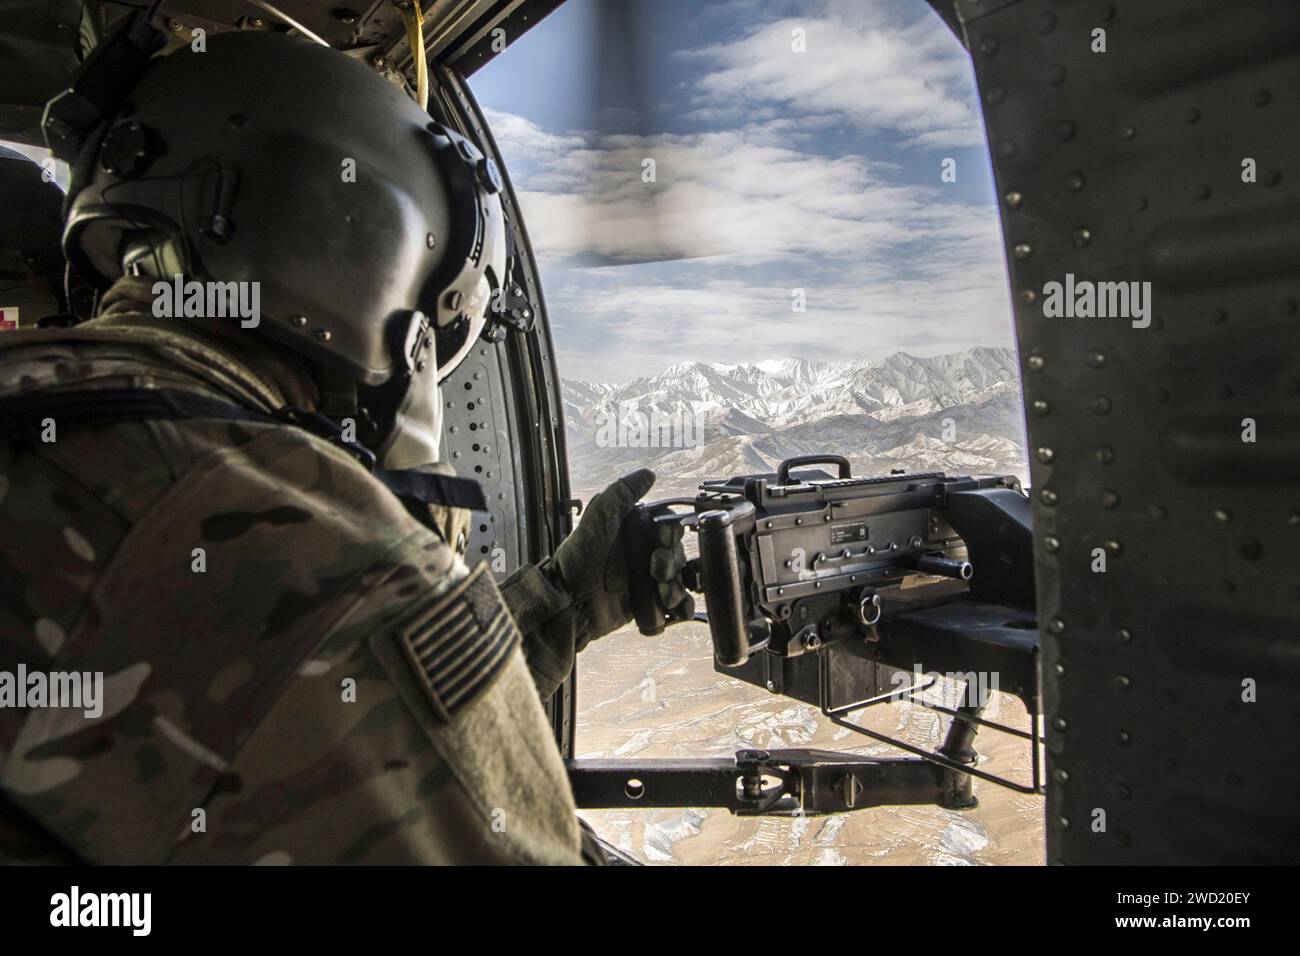 US Army Soldier führt Luftbeobachtung über Afghanistan durch. Stockfoto